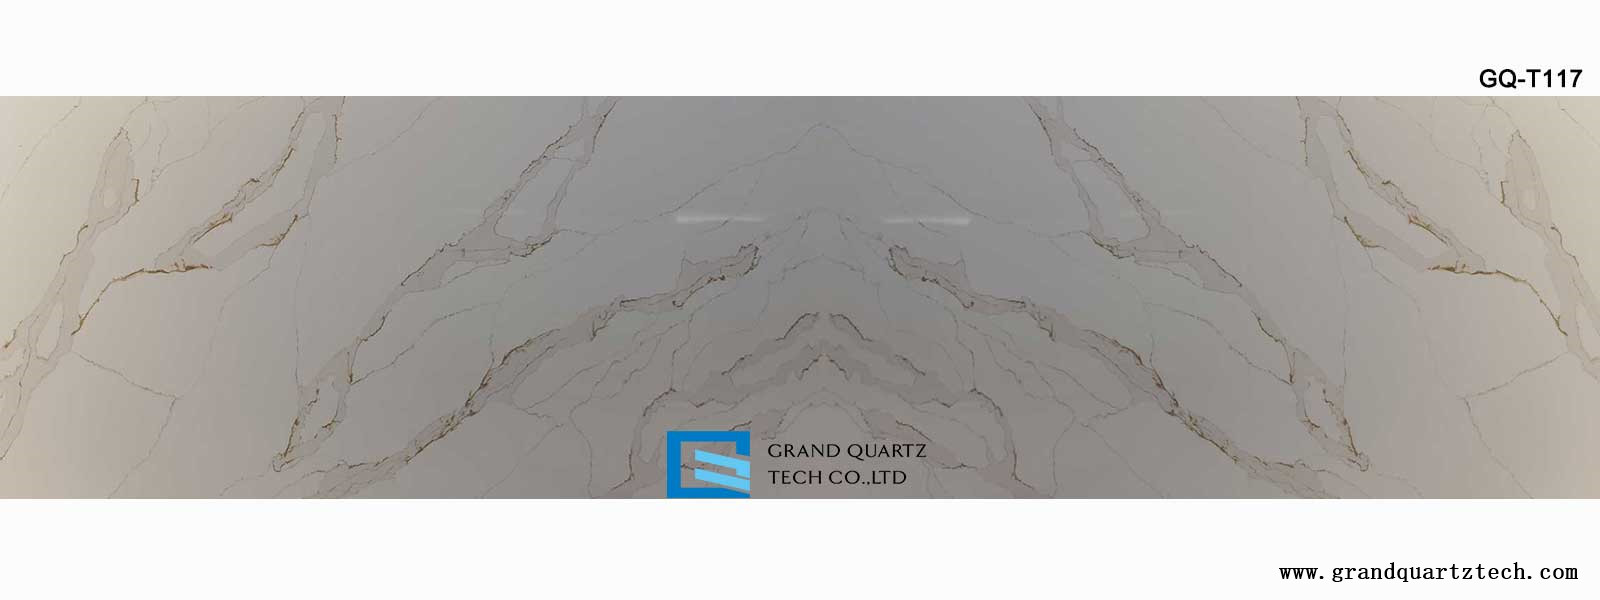 GQ-T117-symmetrical-quartz.jpg 